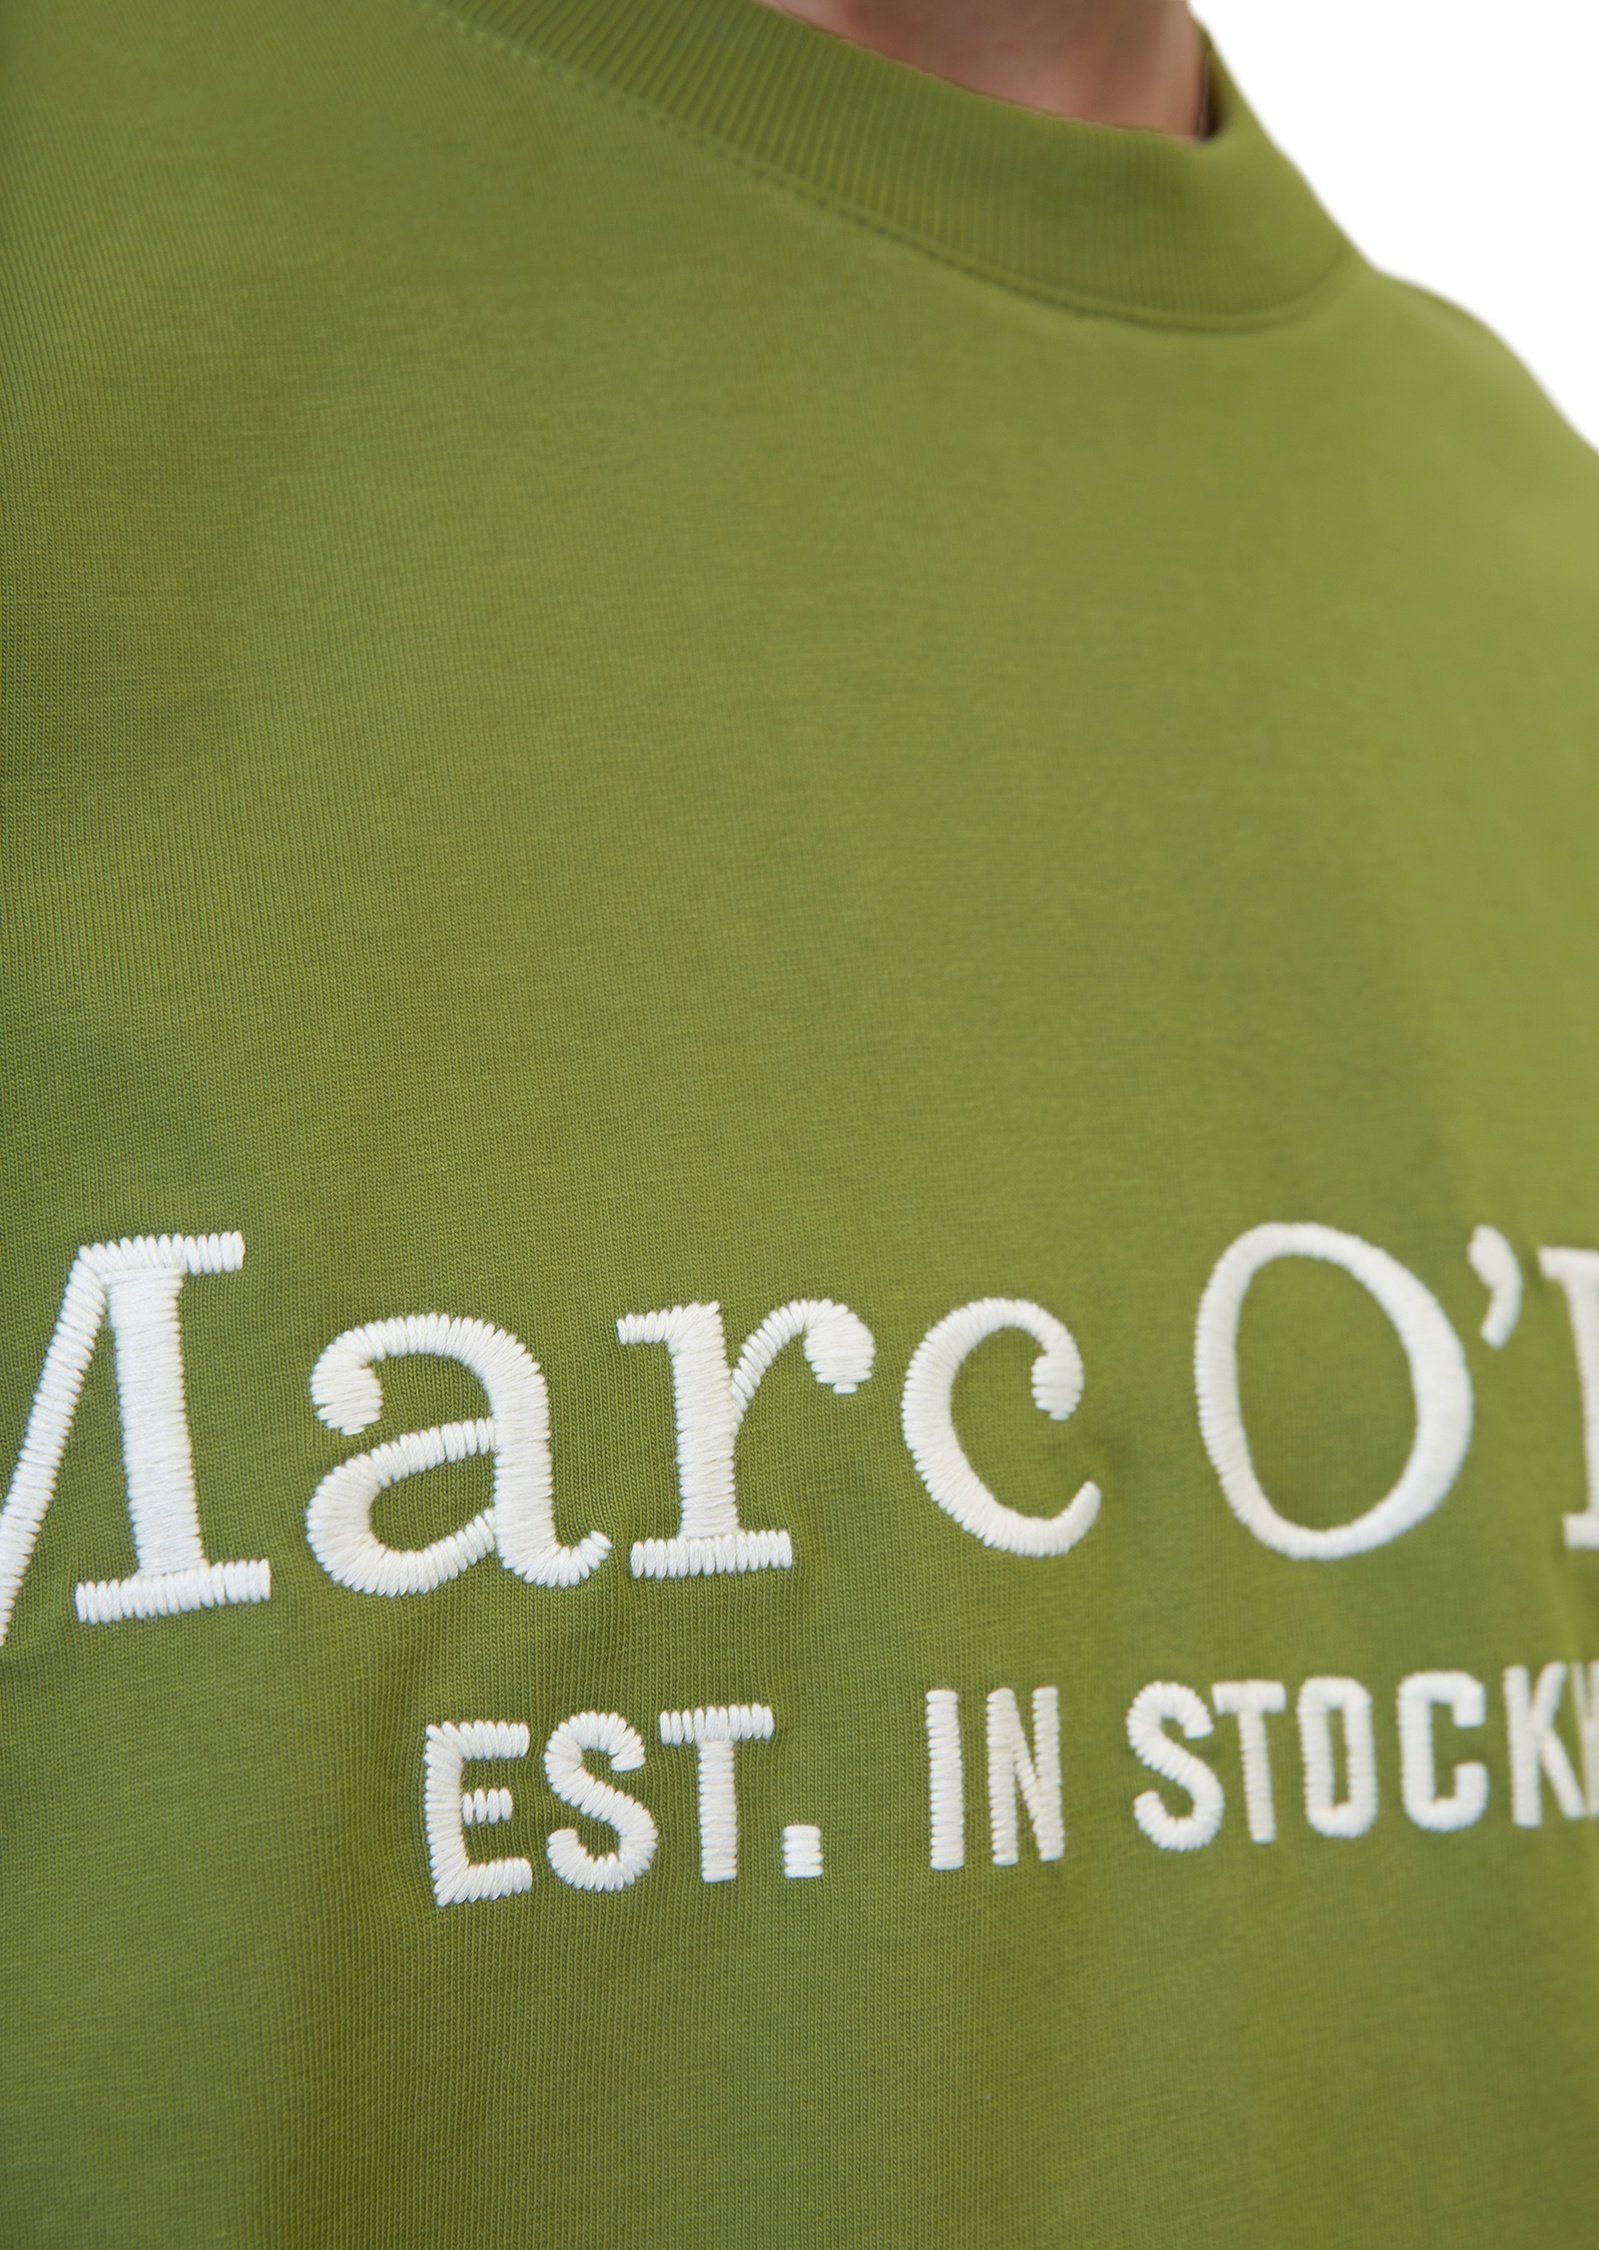 hochwertiger T-Shirt Bio-Baumwolle aus Marc dunkelgrün O'Polo